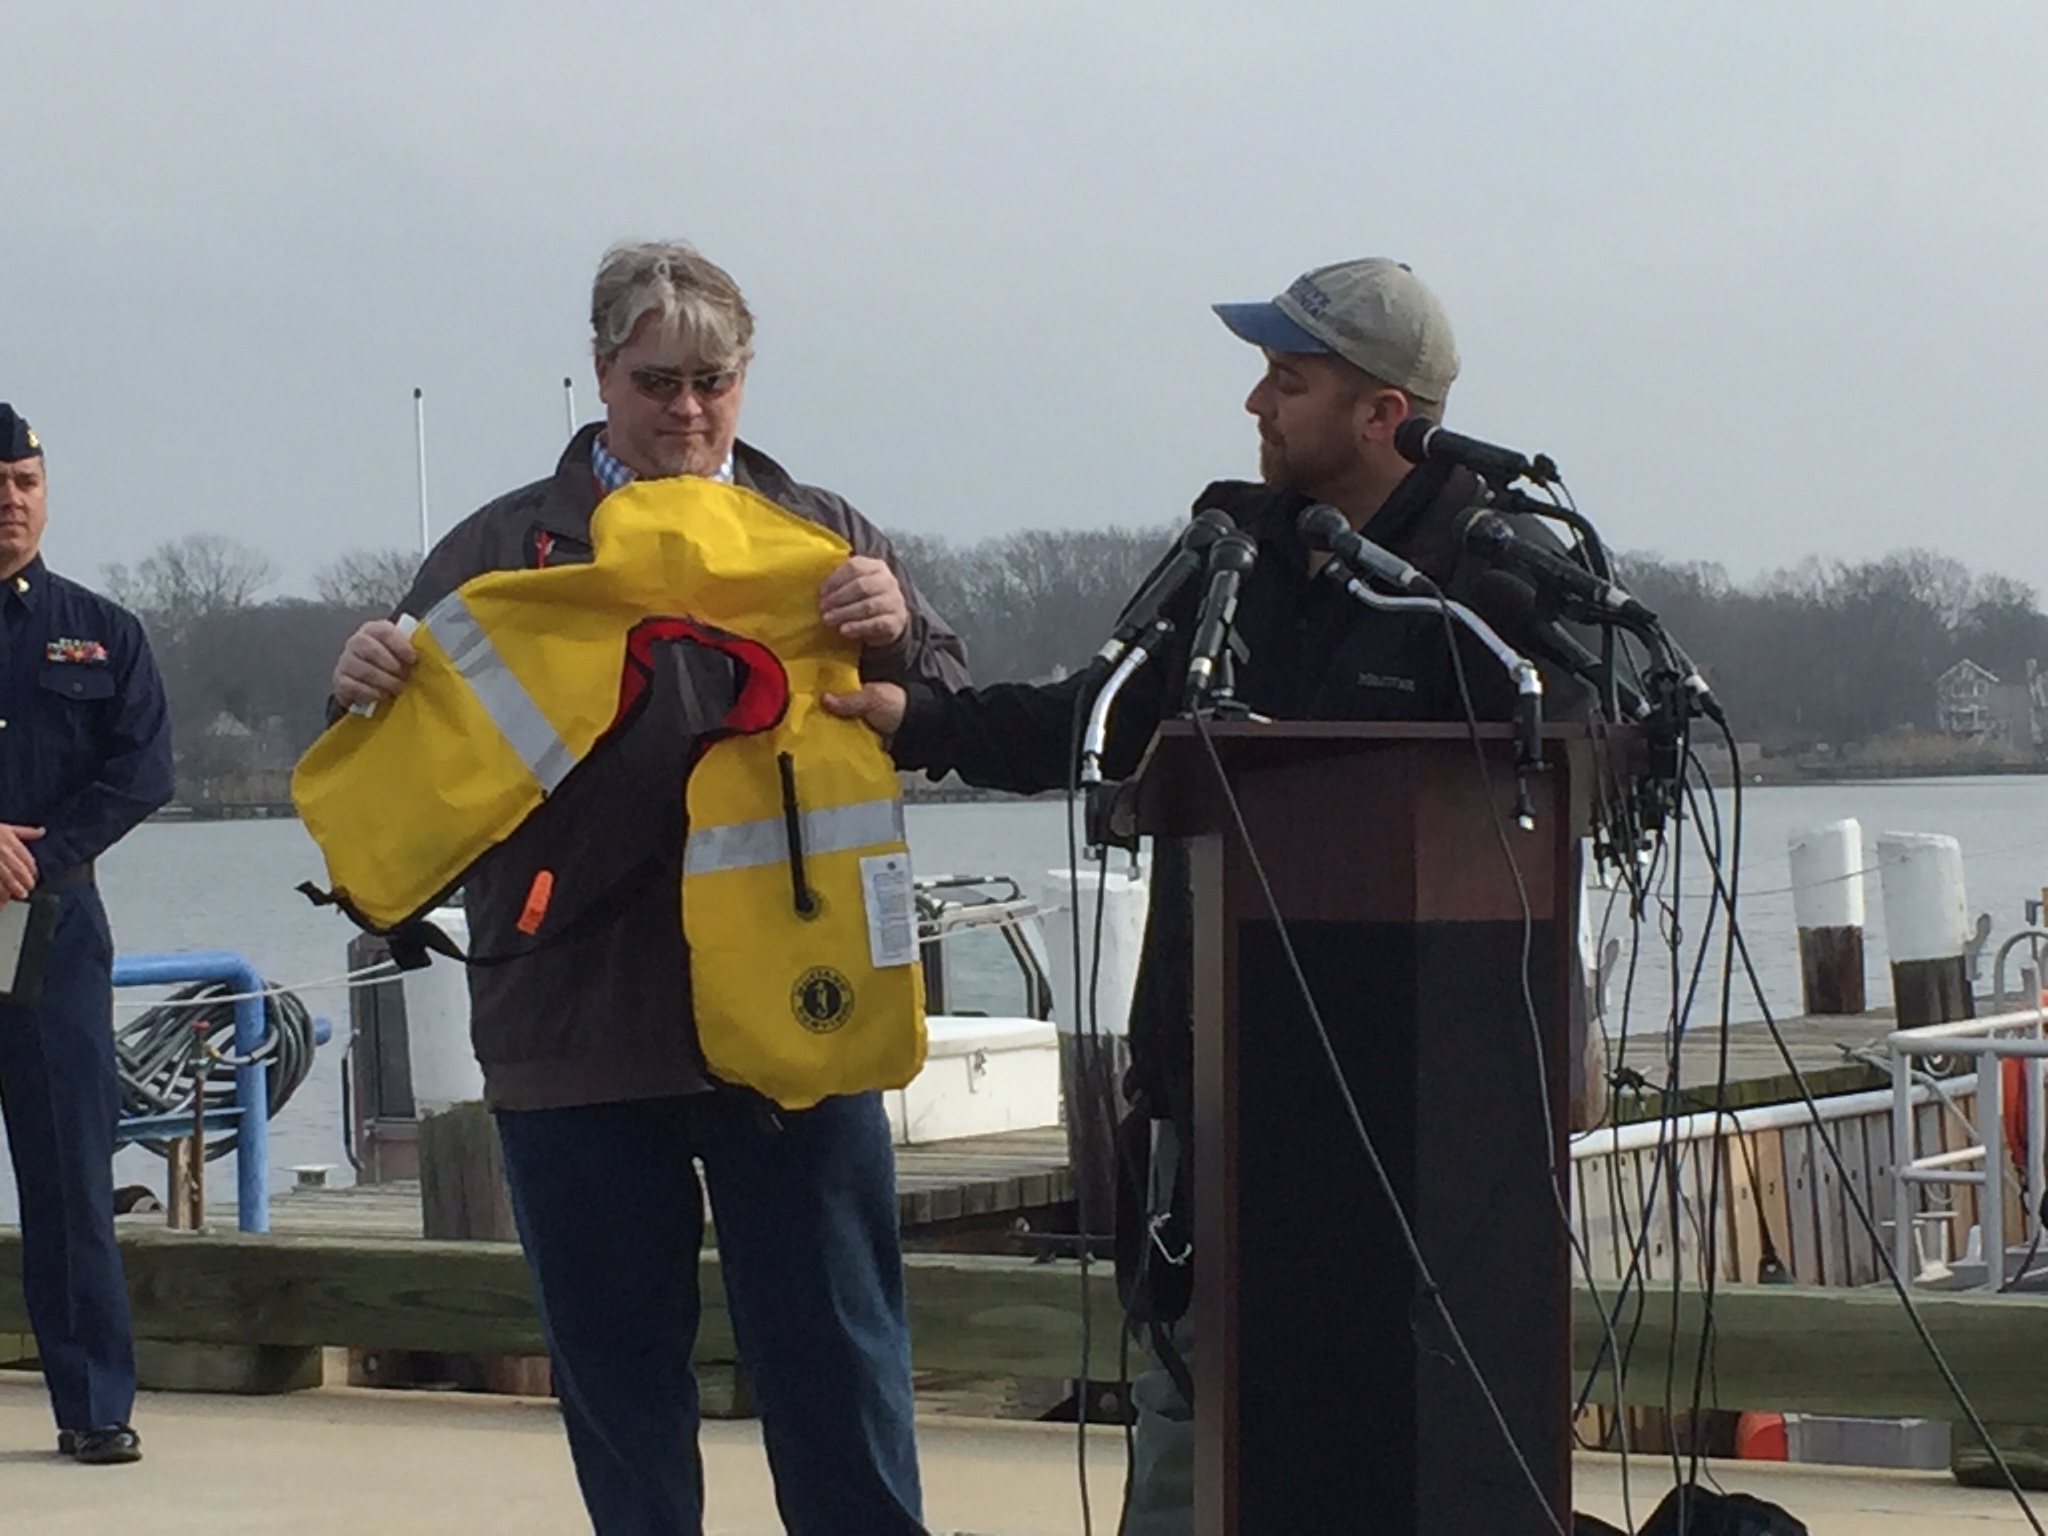 Preparation saved fishermen who capsized on Potomac River